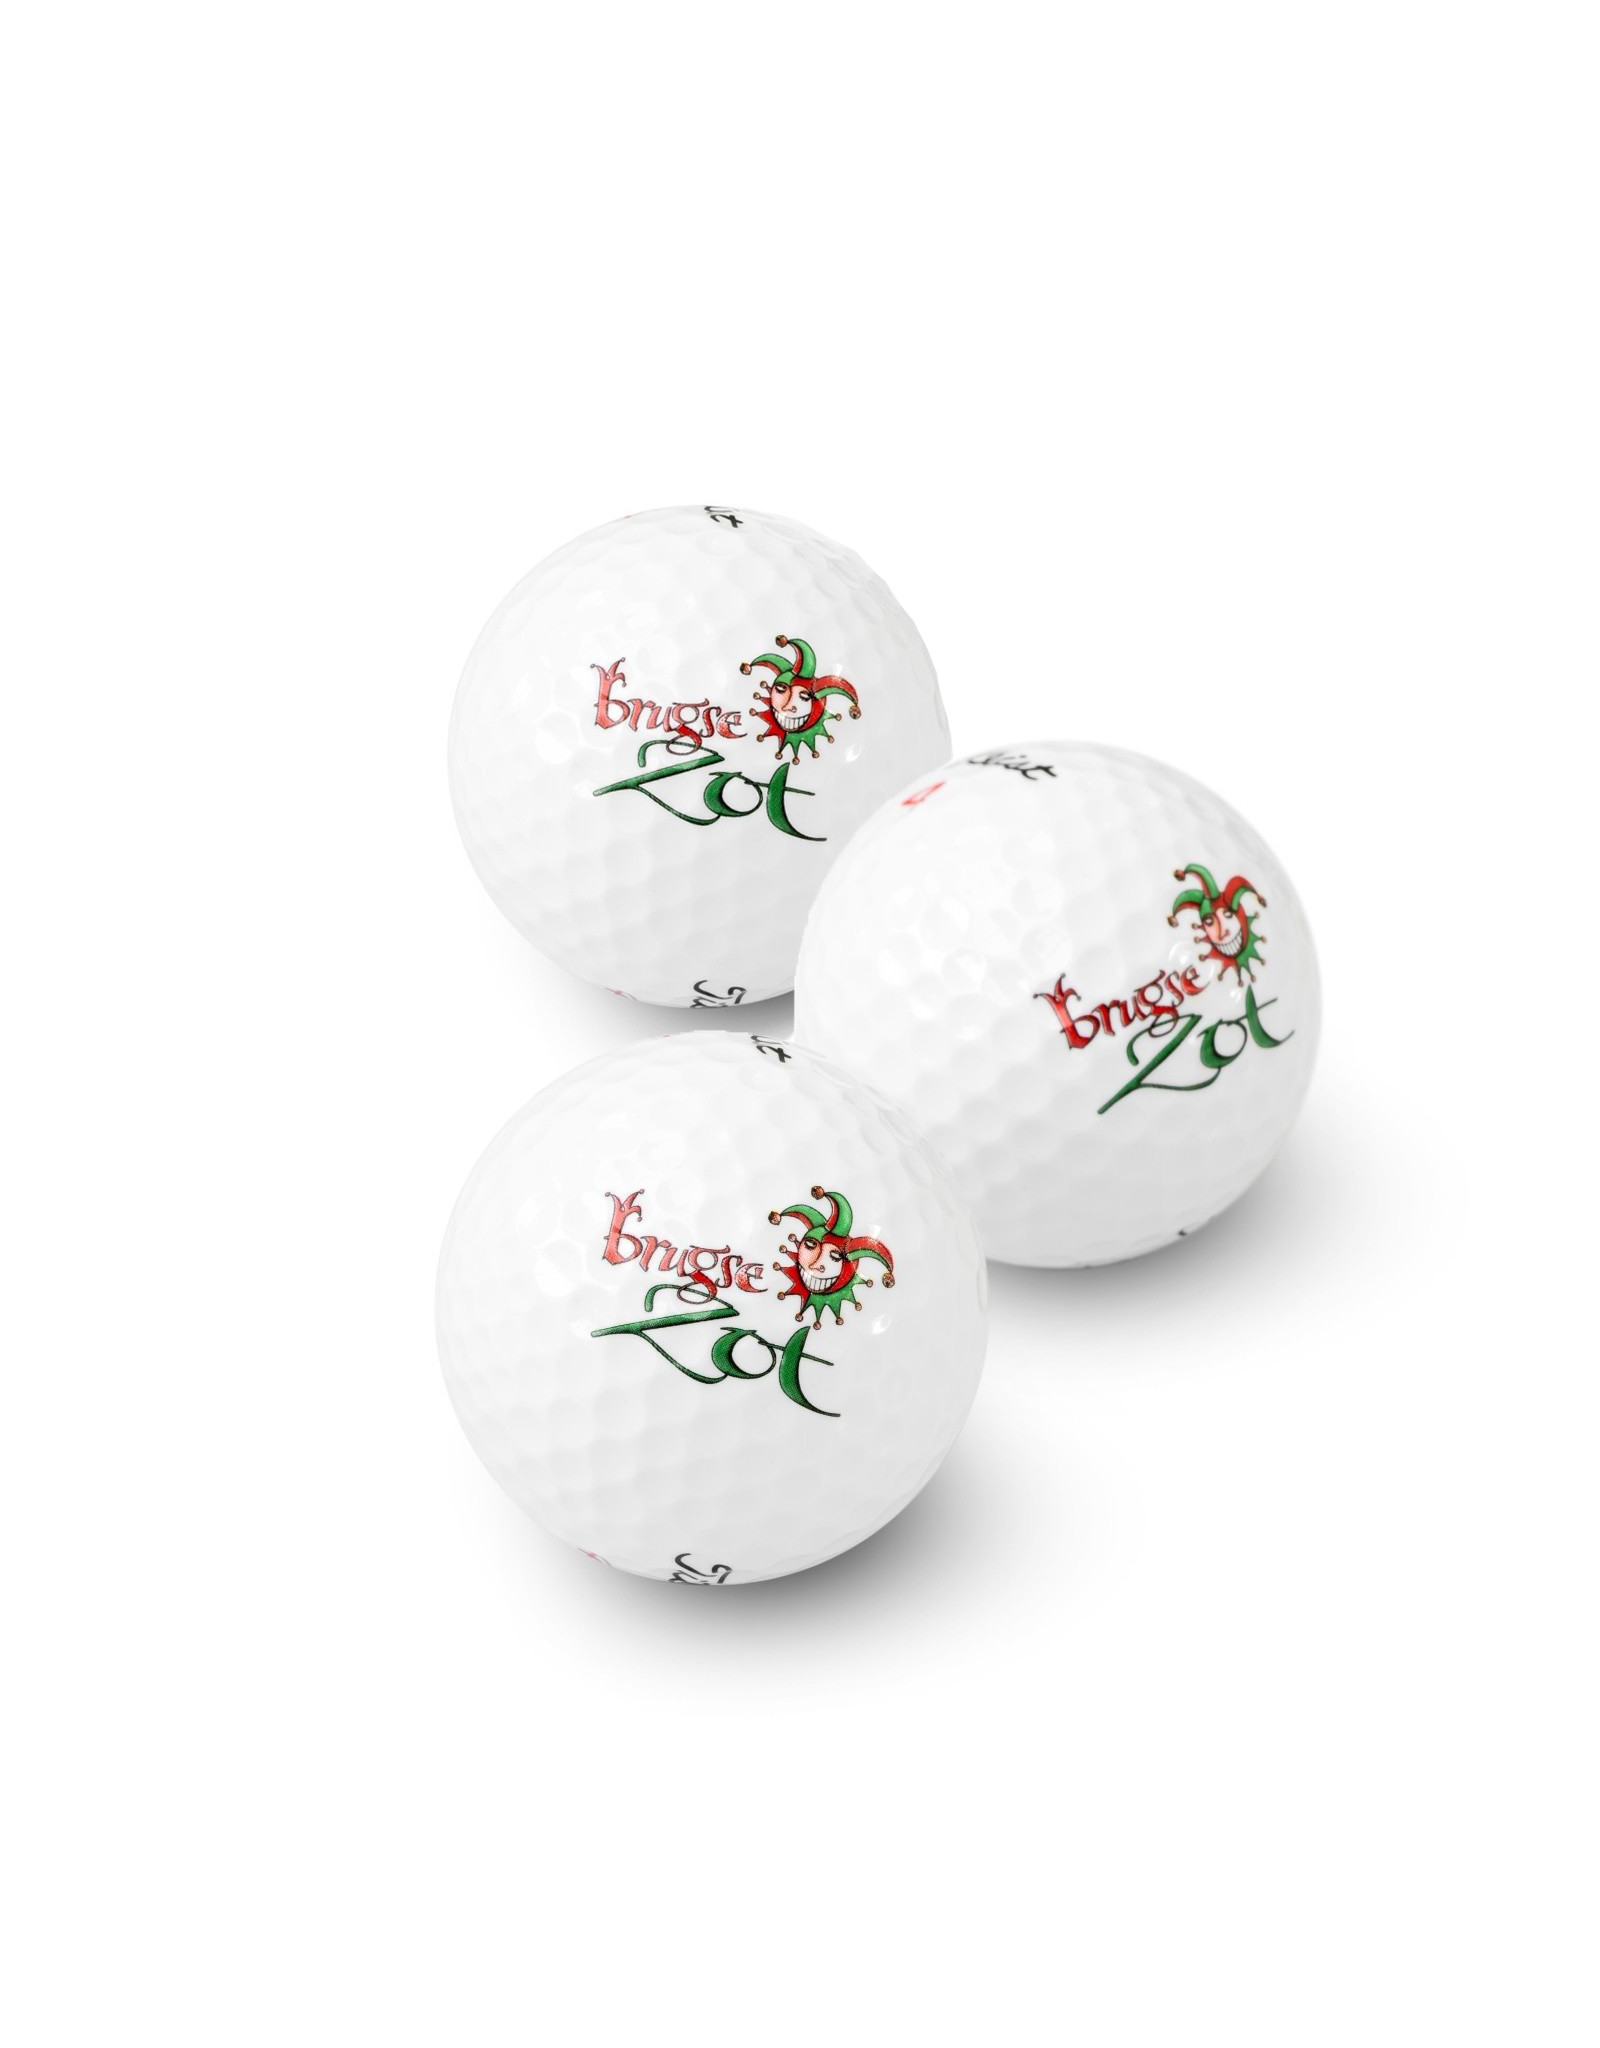 Brugse Zot box of 3 golf balls